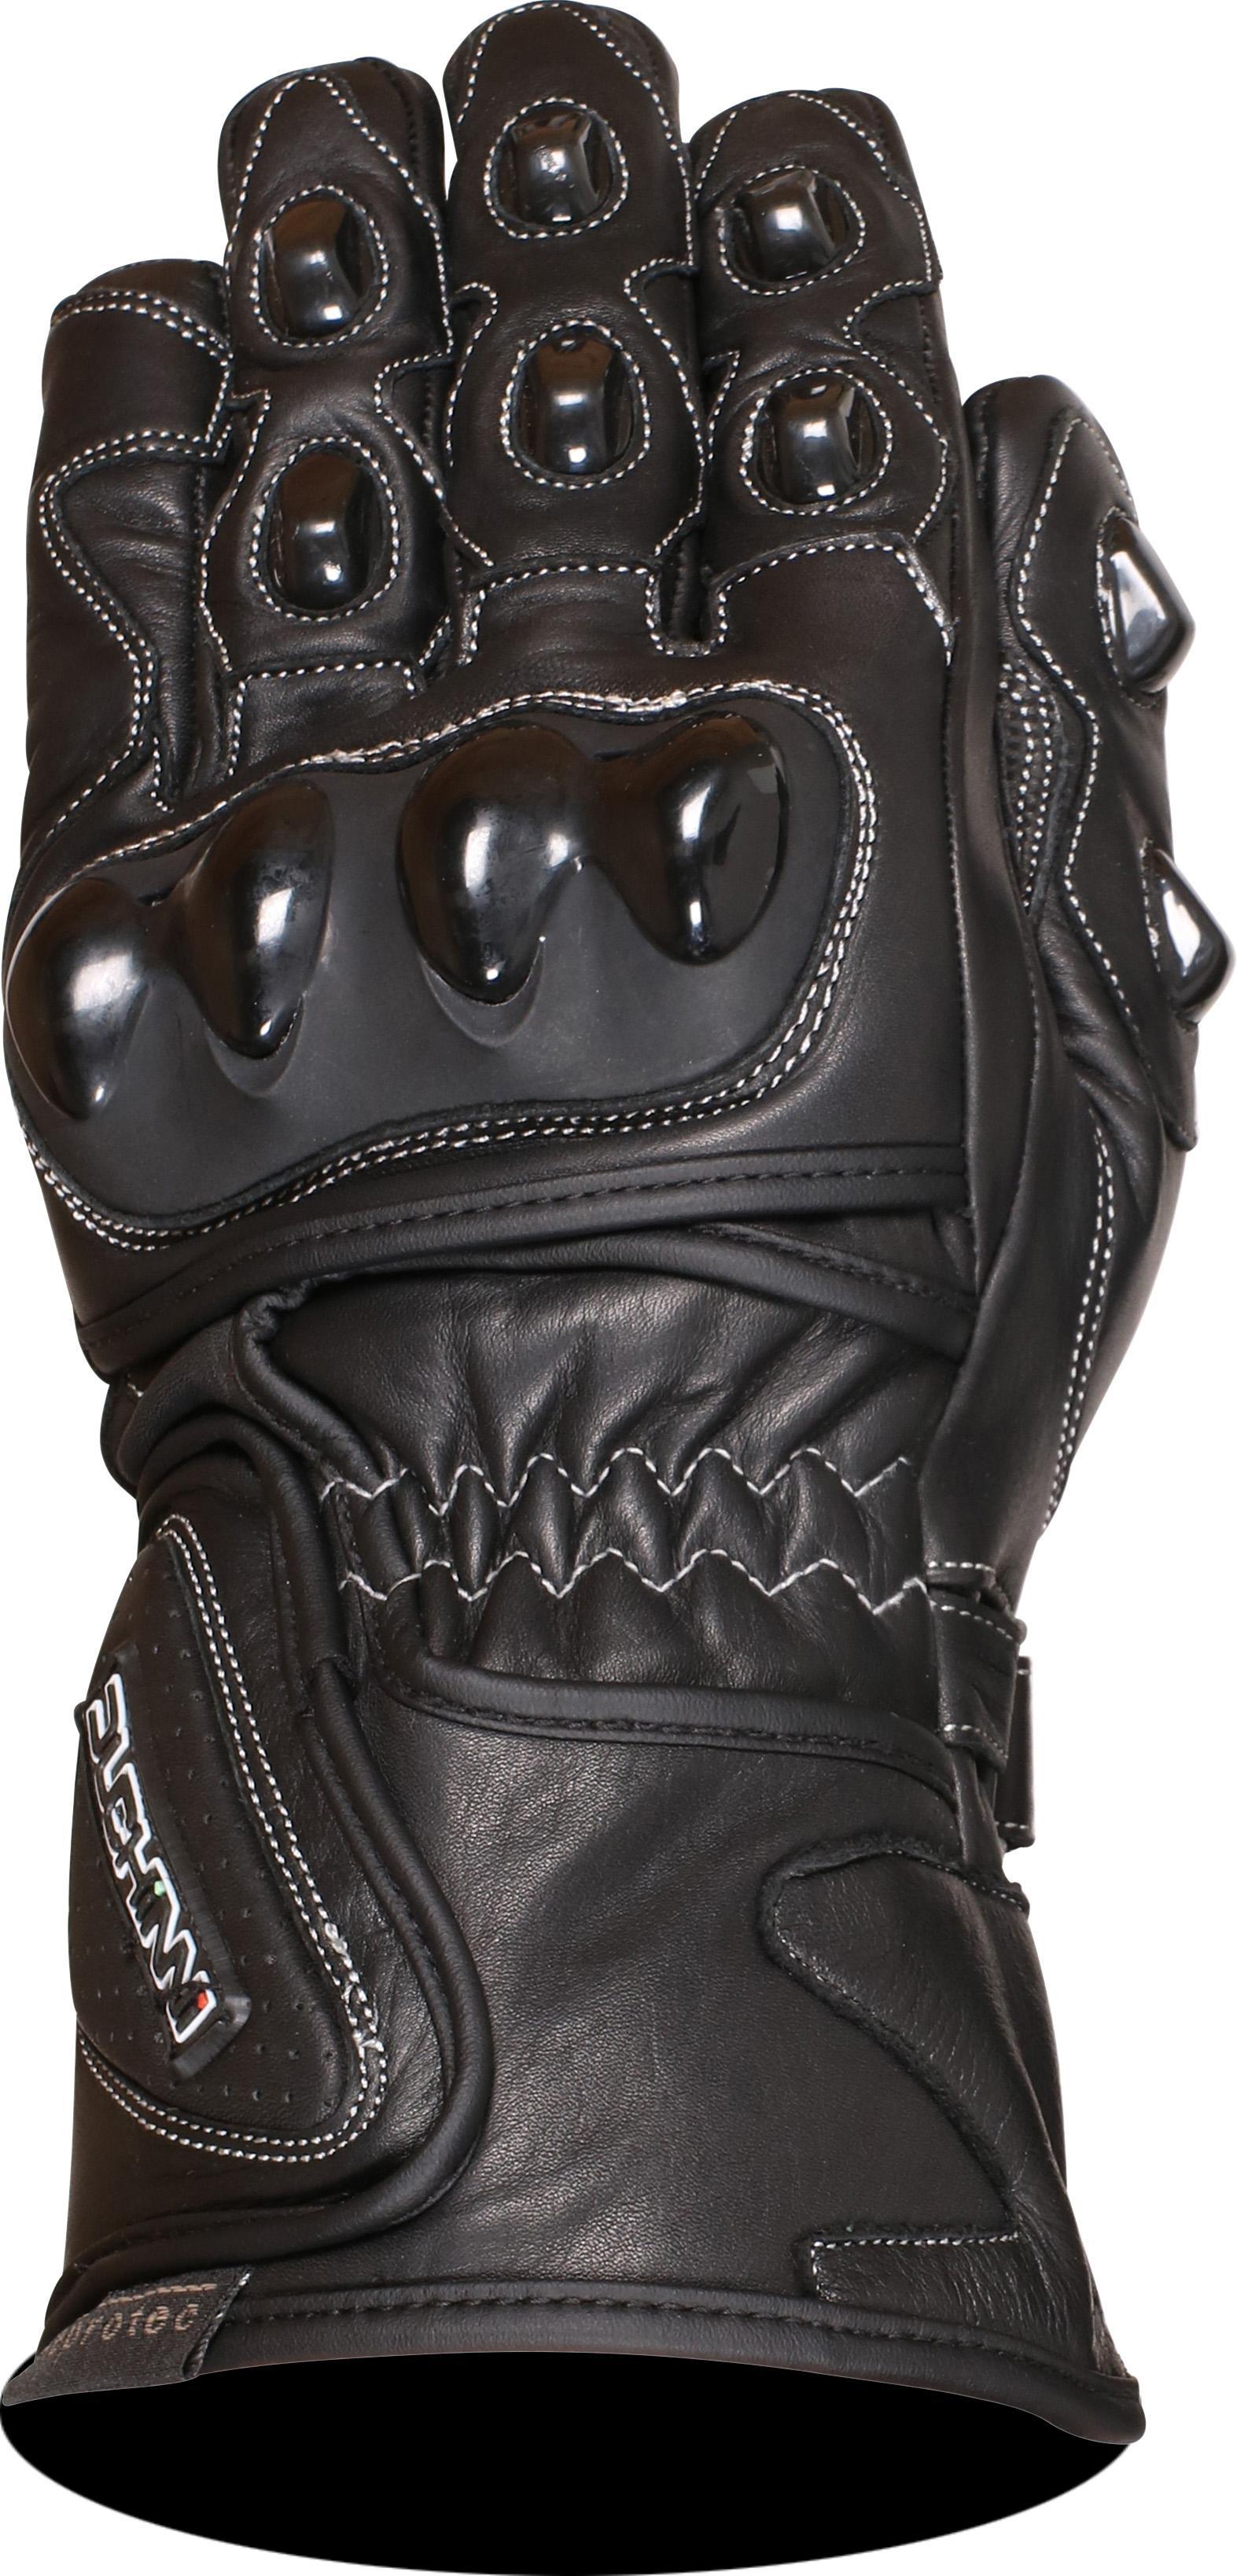 Duchinni Dr1 Motorcycle Gloves - Black, 2Xl